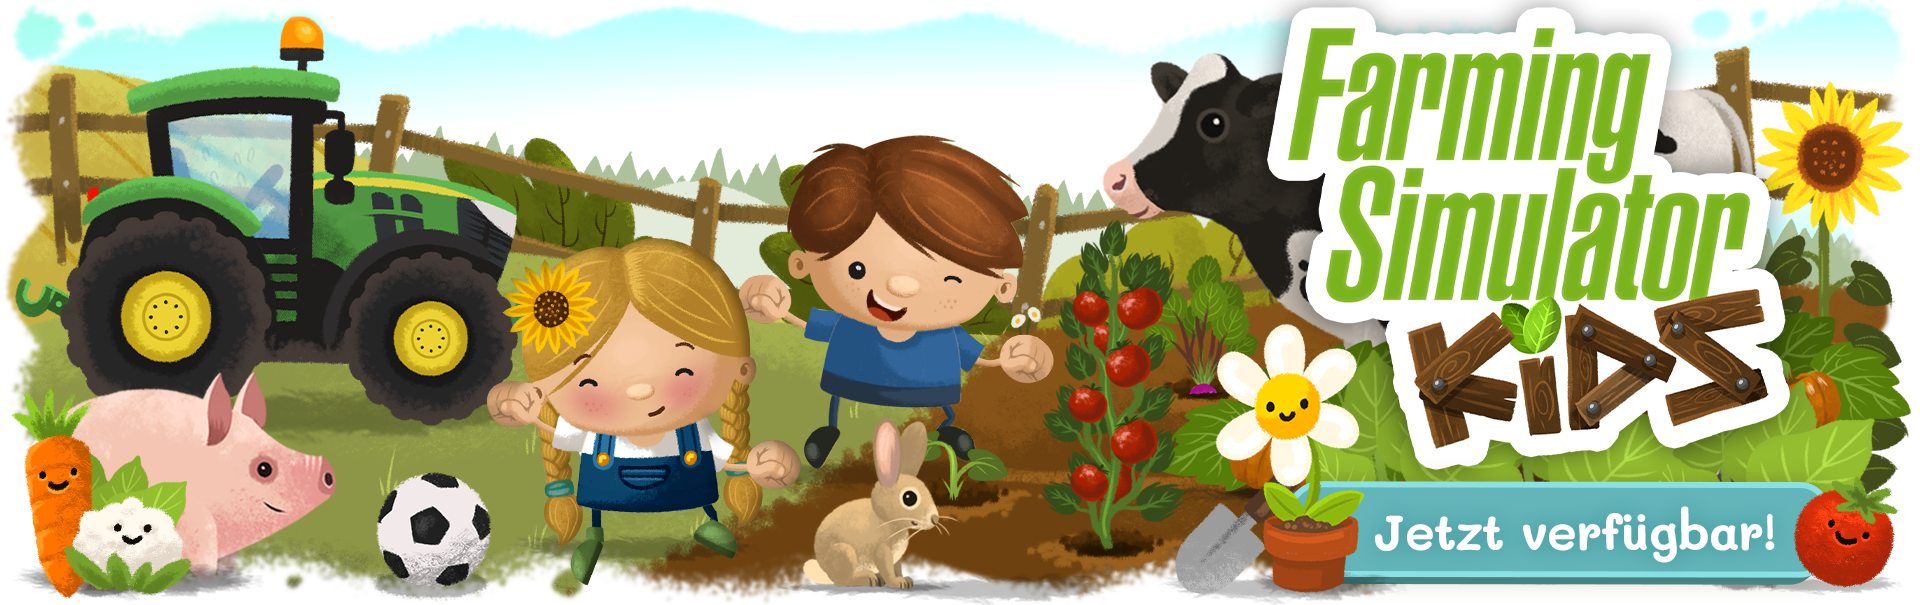 Farming Simulator Kids - Available